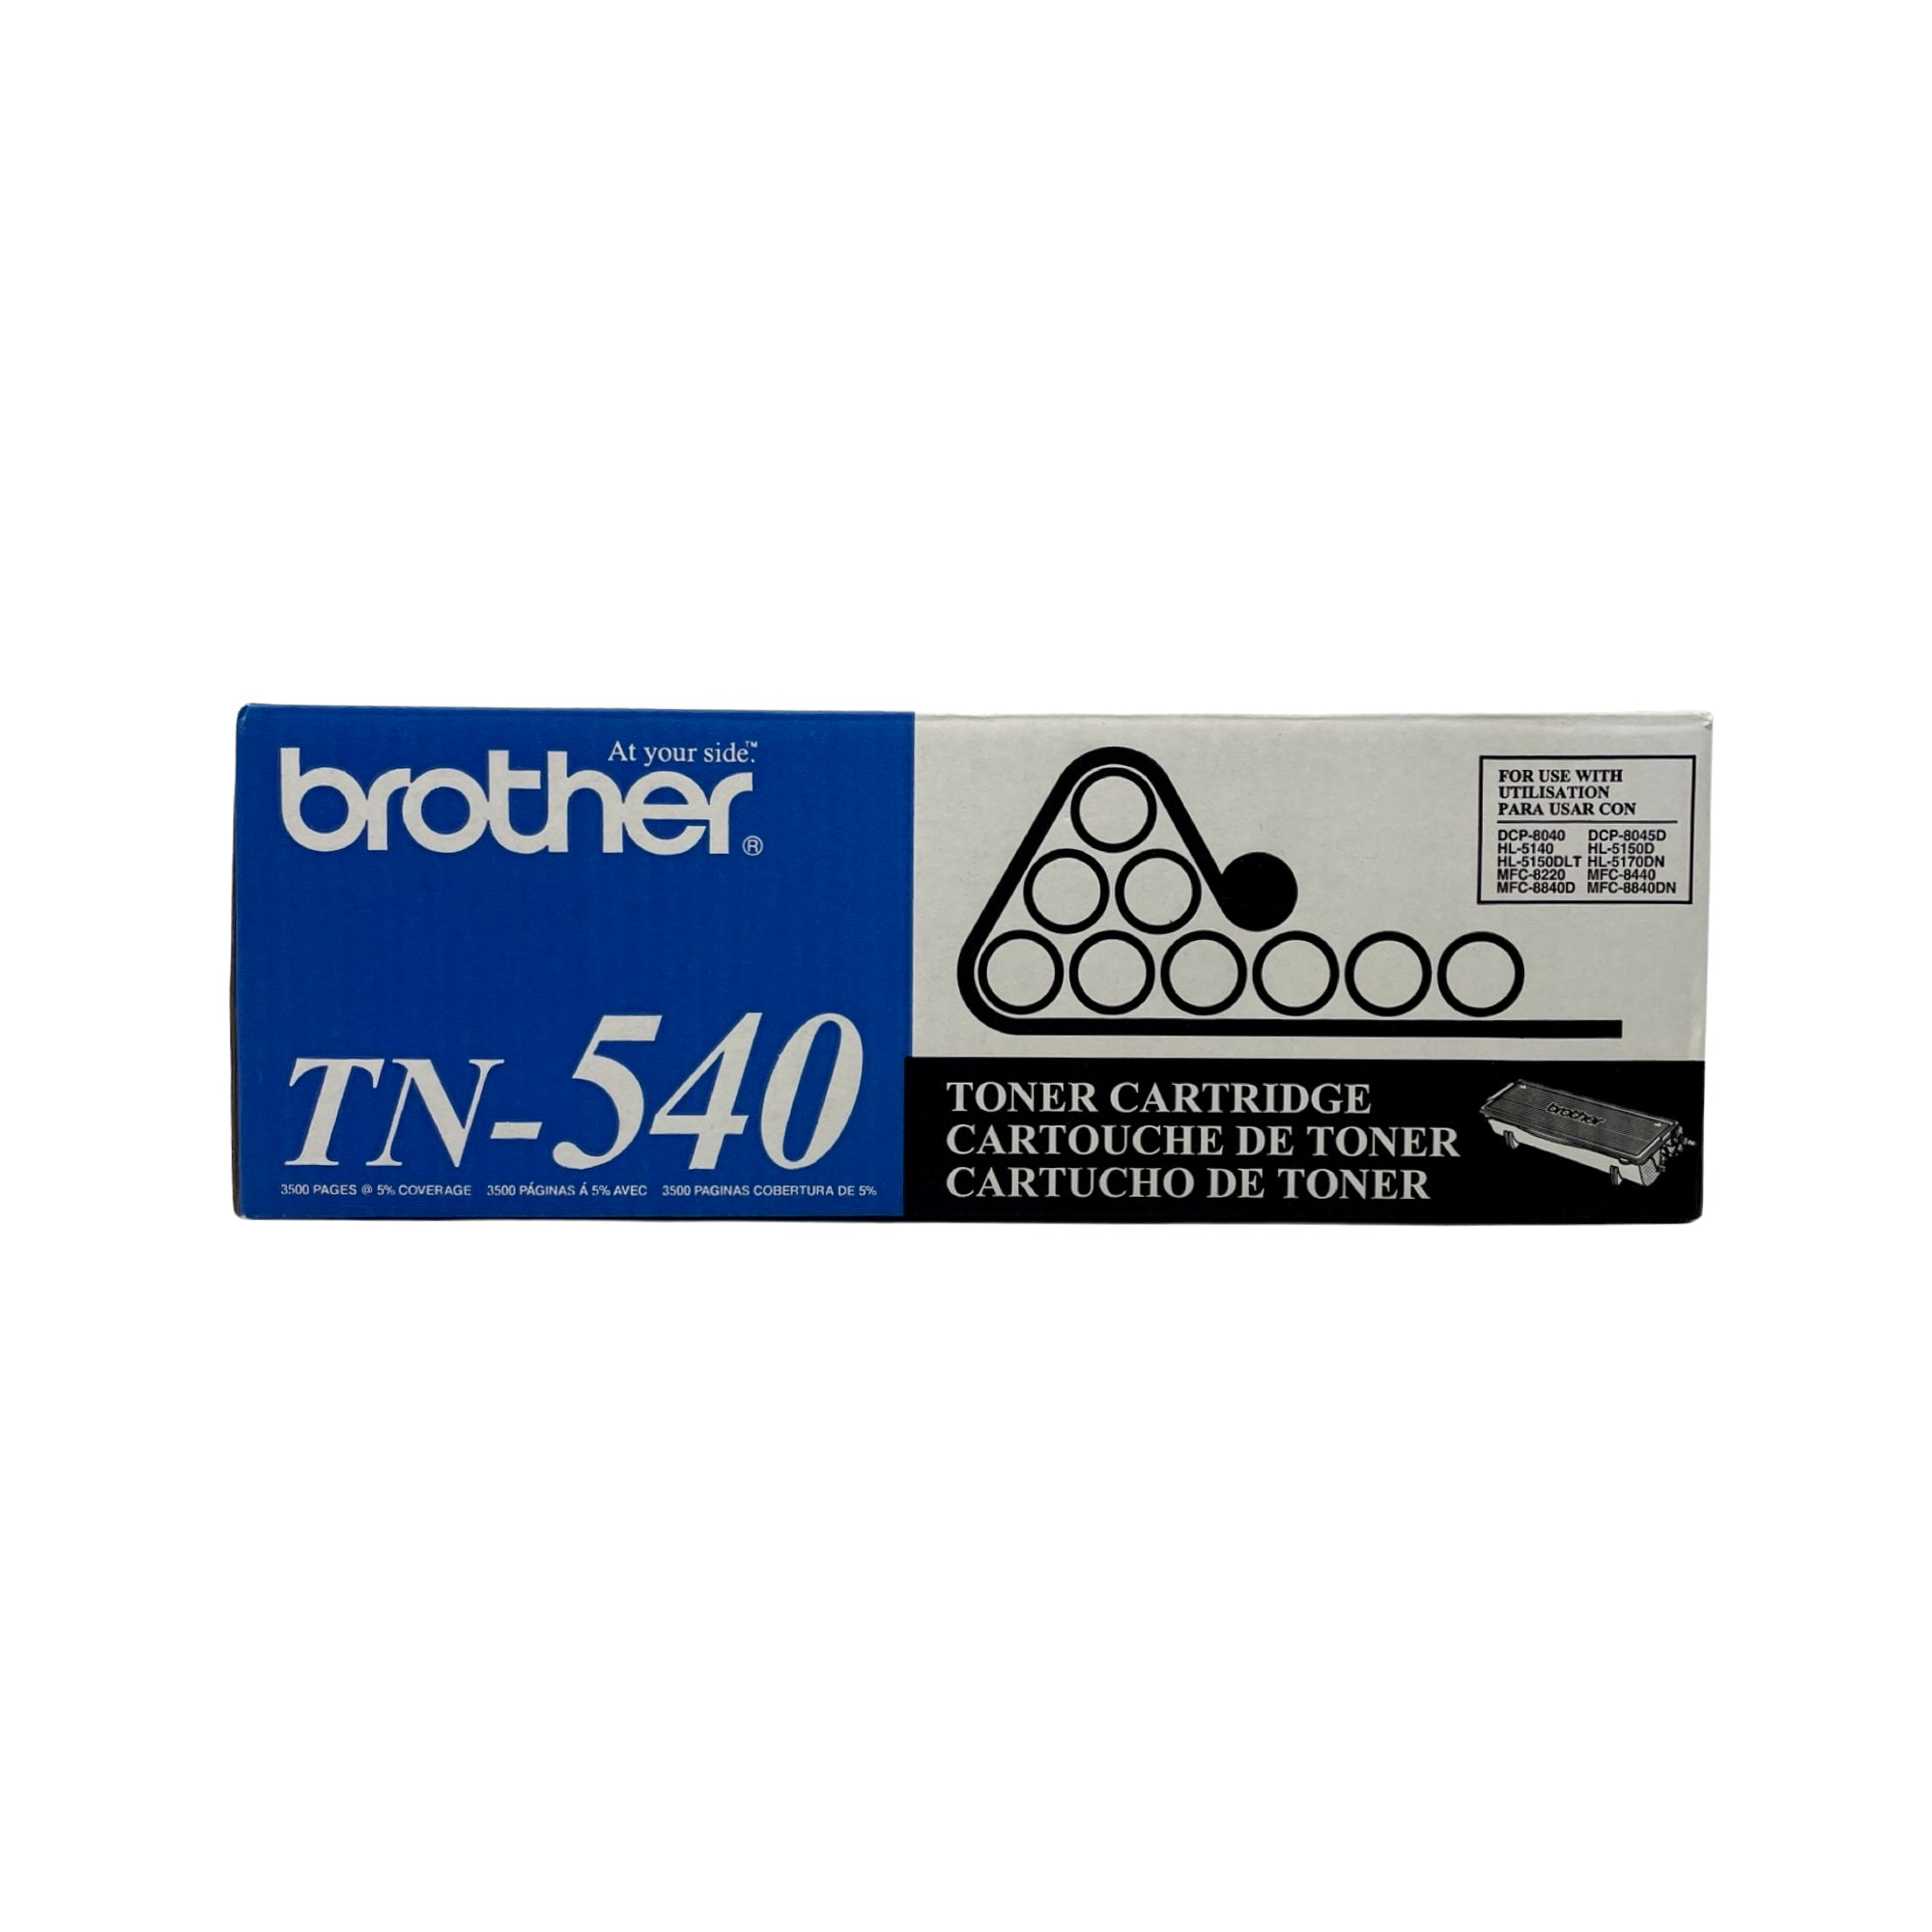 Brother TN-540 Black Laser Toner Cartridge